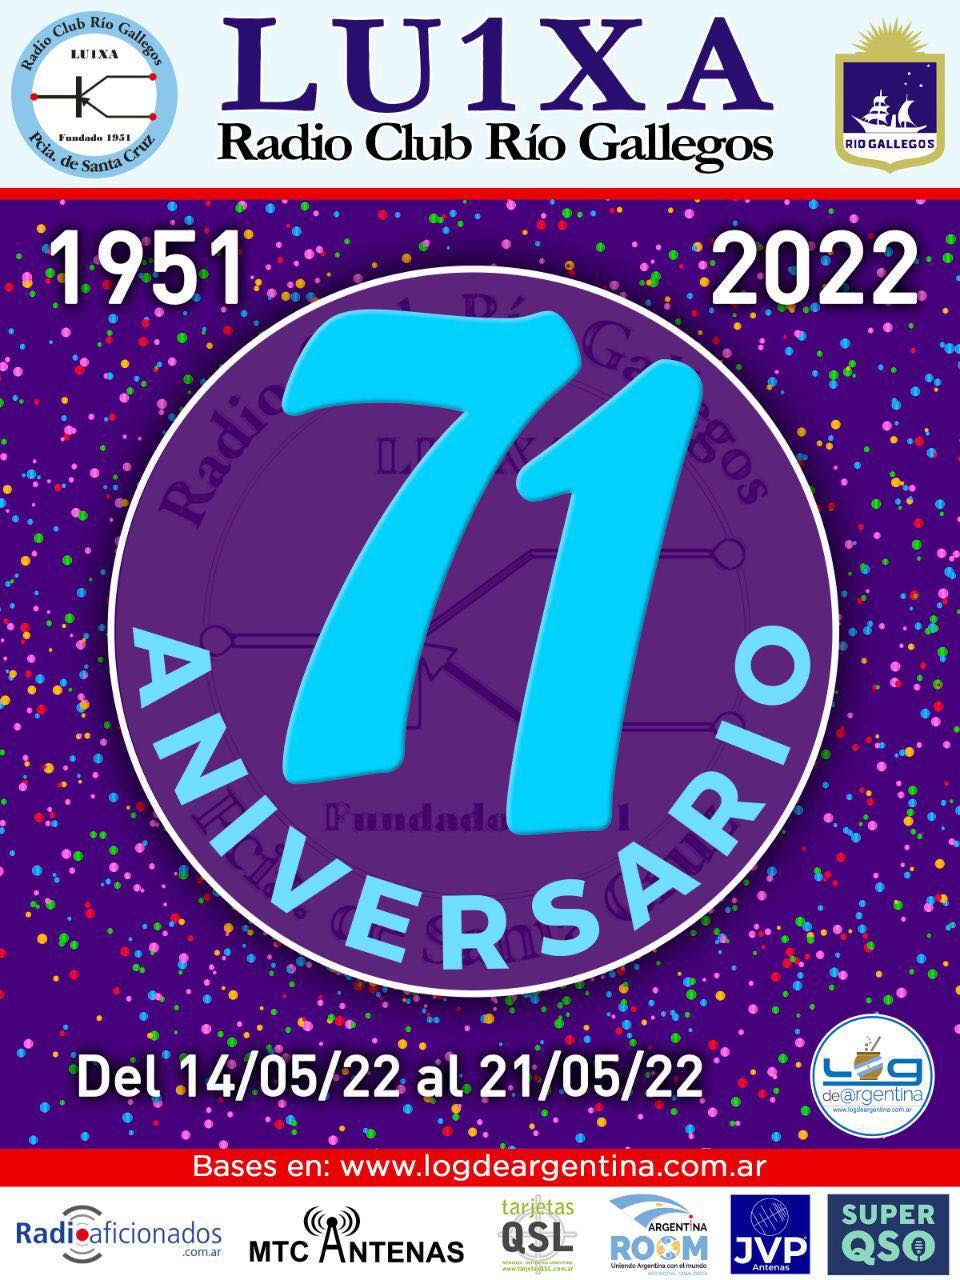 LU1XA: 71º Aniversario Radio Club Río Gallegos